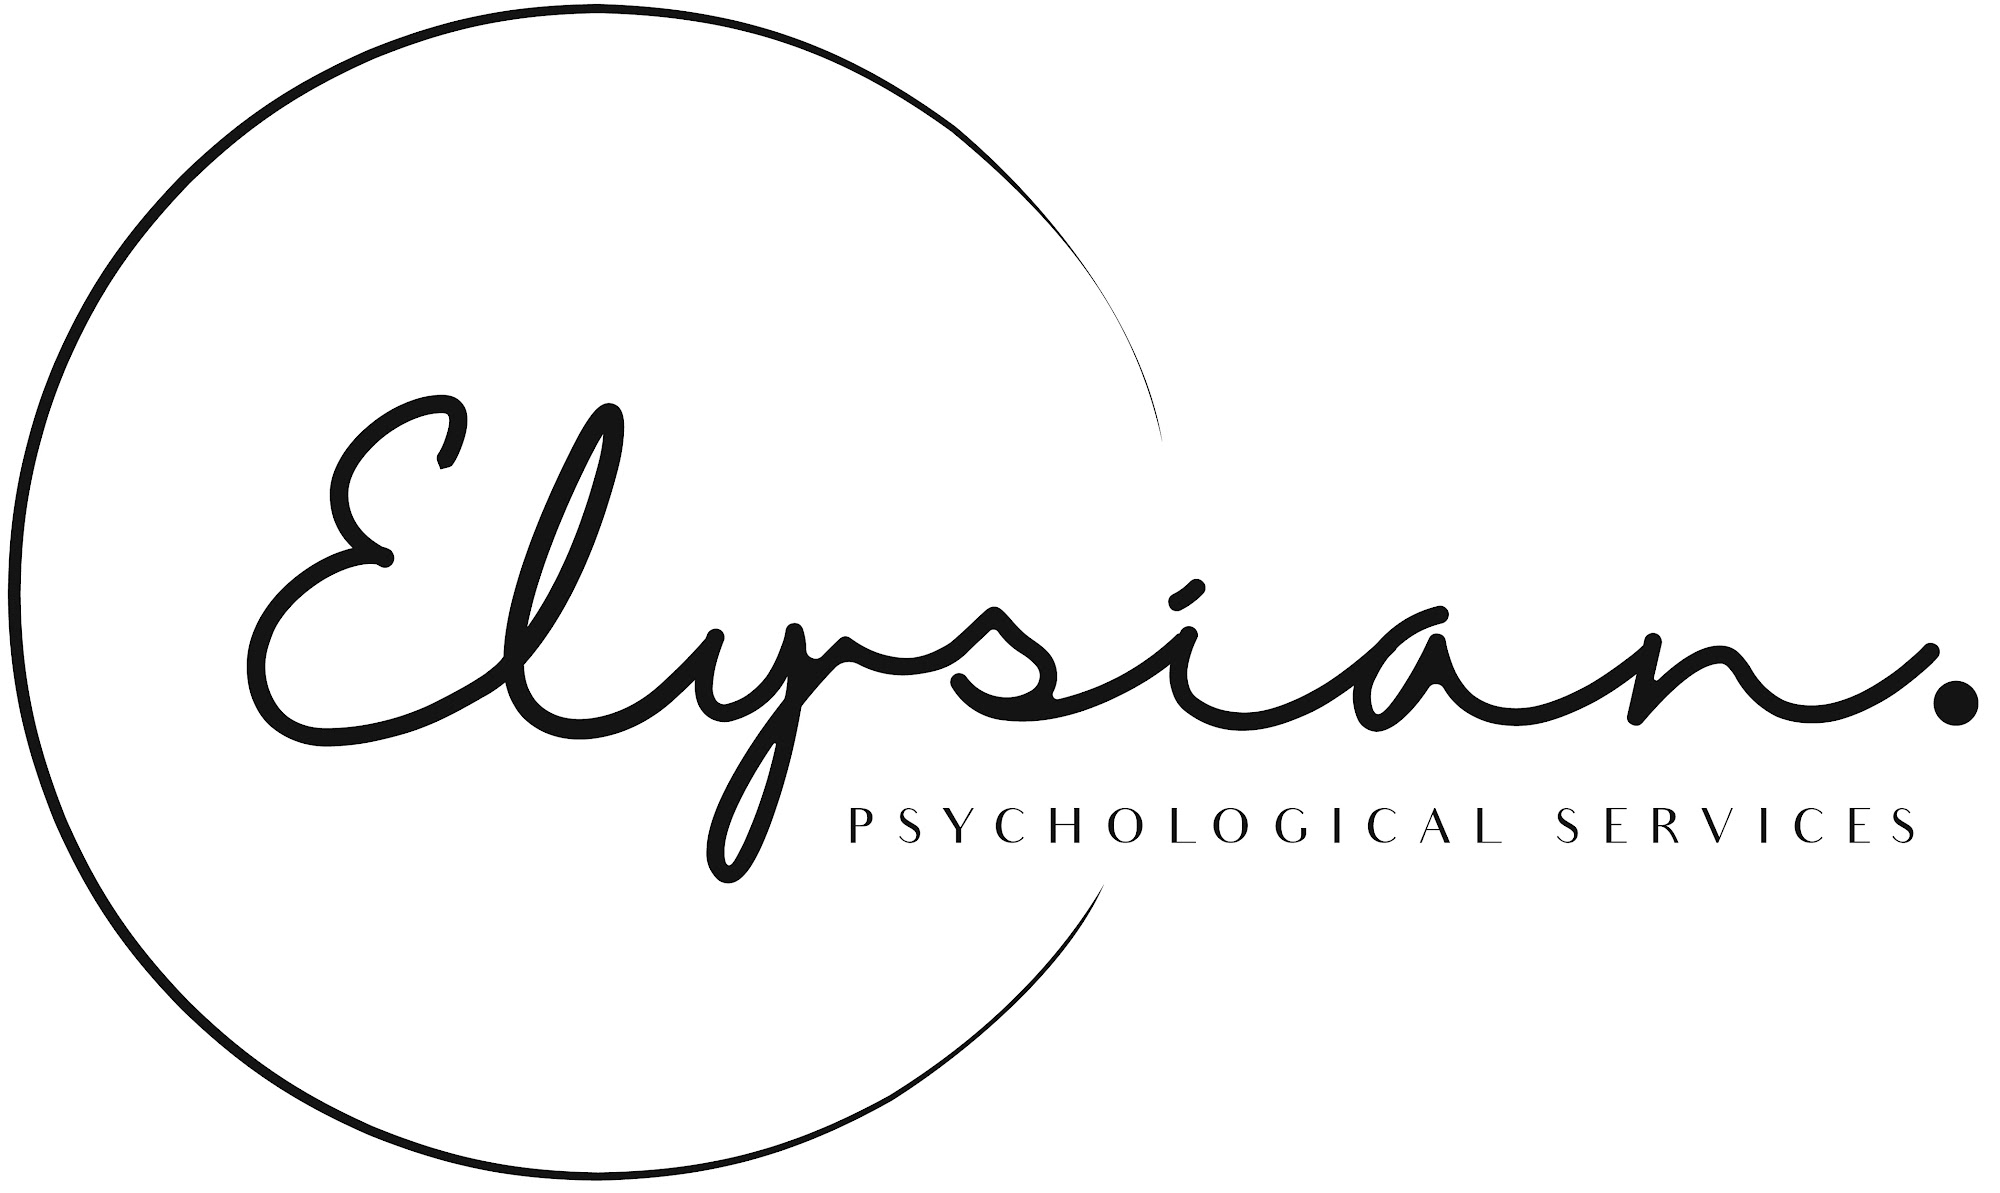 Elysian Psychological Services 4250 Fairfax Dr, Arlington, VA 22203